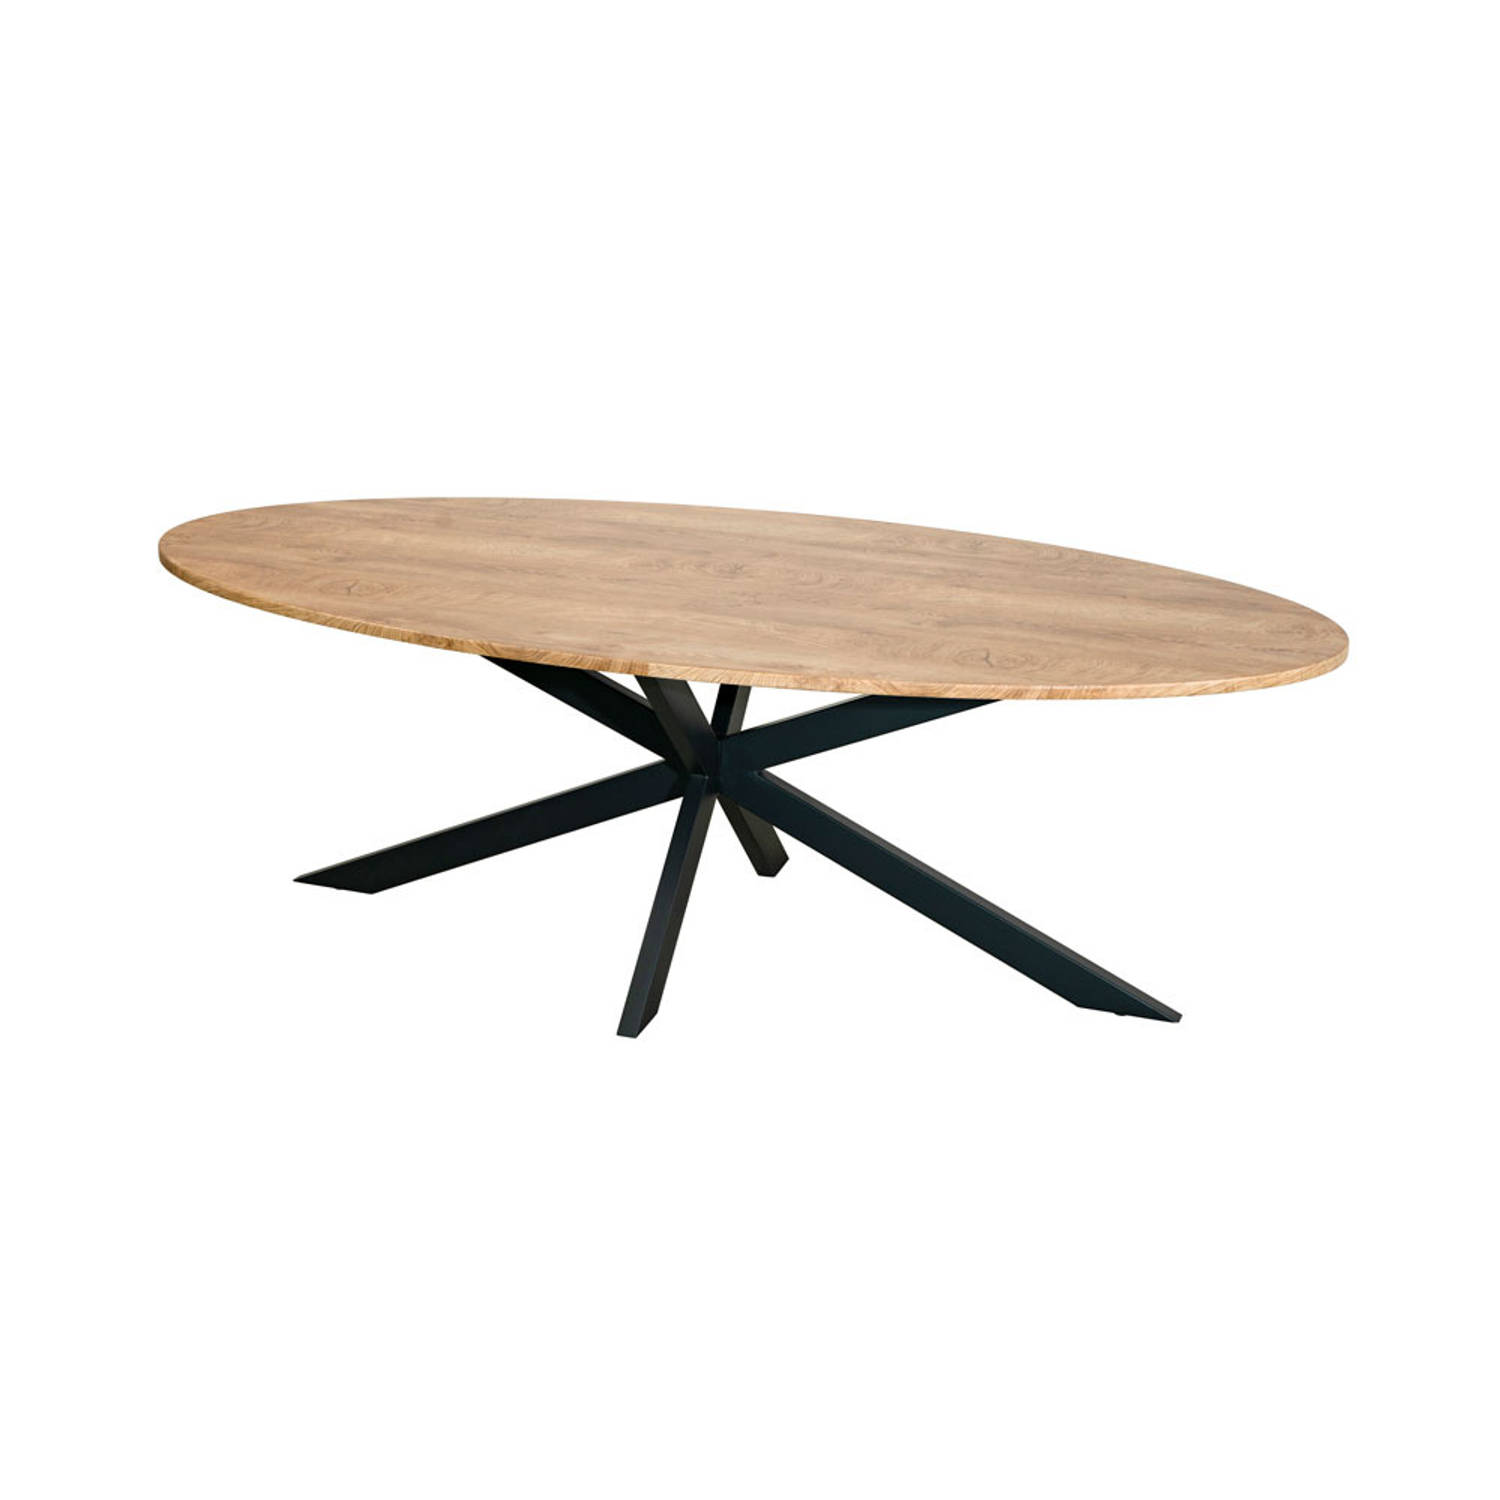 Eettafel ovaal 240cm Rato bruin ovale tafel